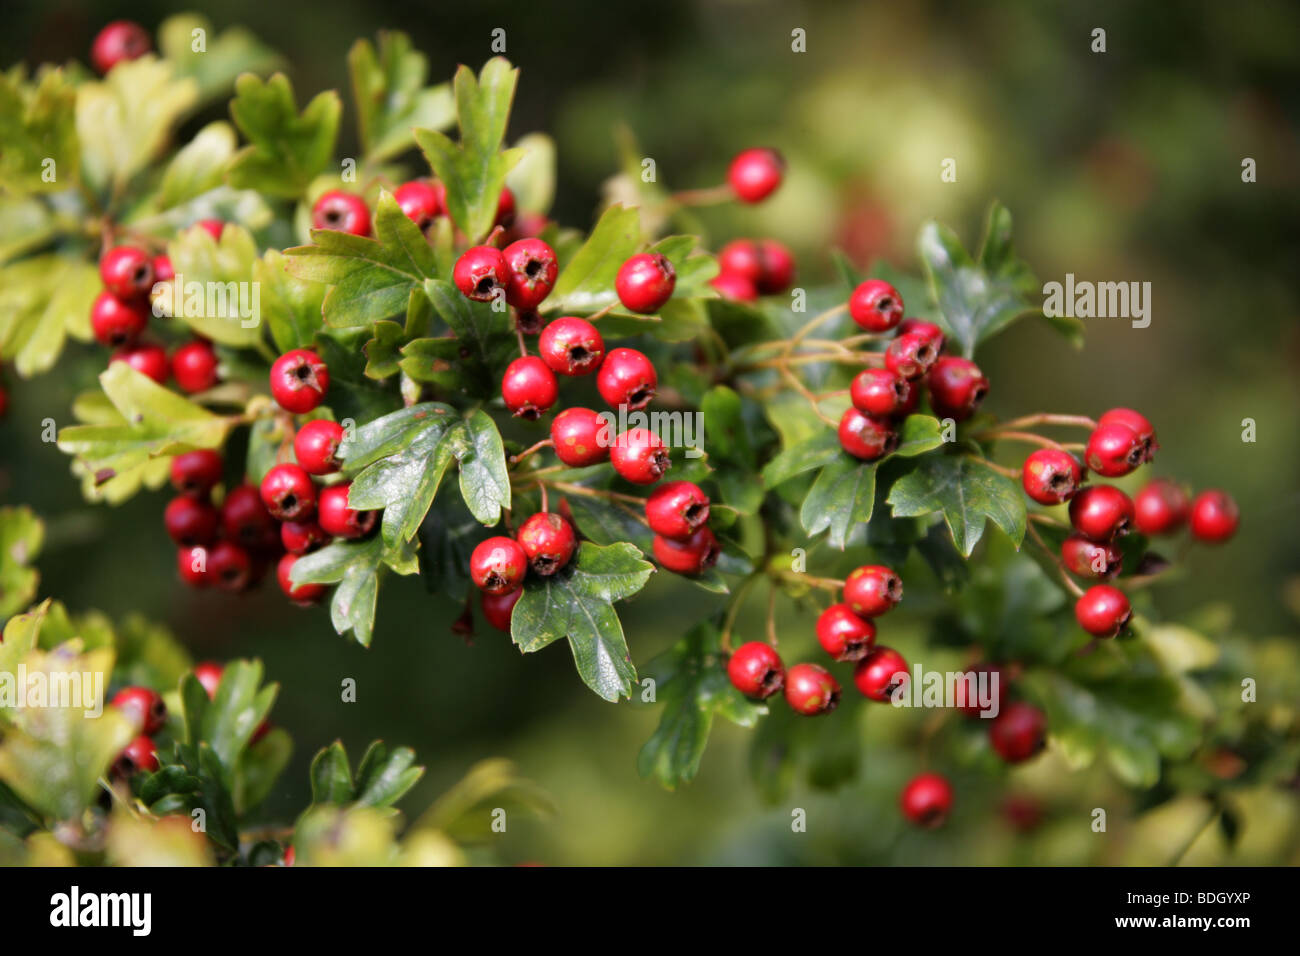 Hawthorn or May Tree Berries, Crataegus monogyna, Rosaceae Stock Photo